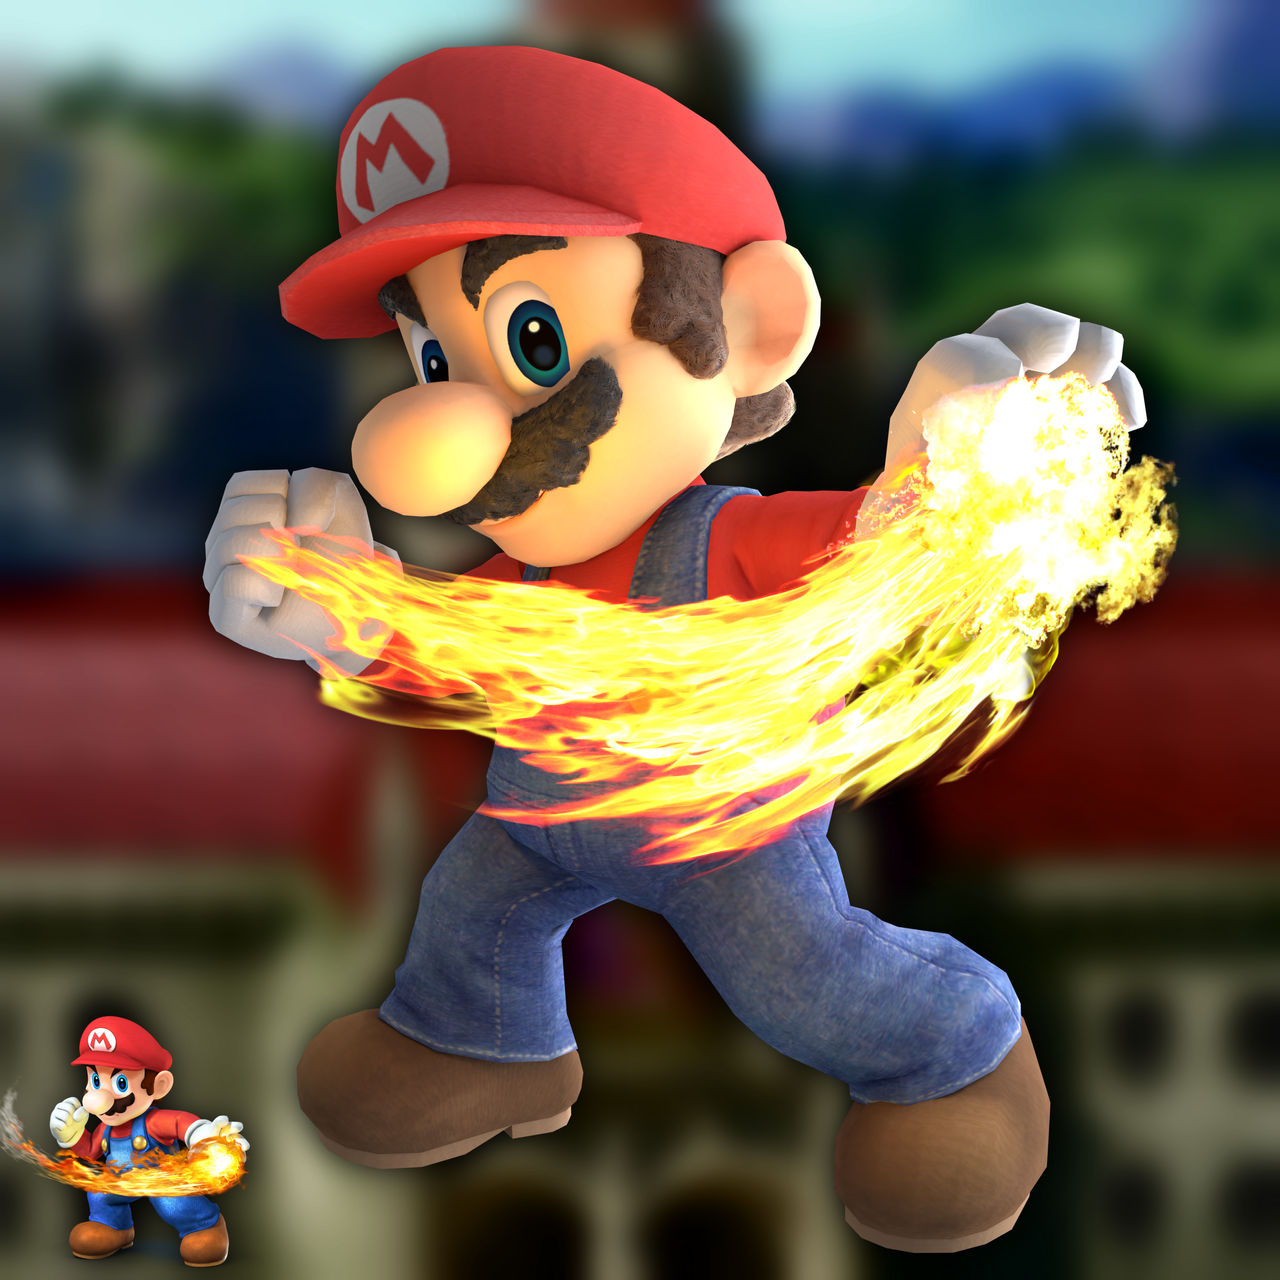 3D Render: Smash 4 Mario Render Remake by MegaMario2001 on DeviantArt